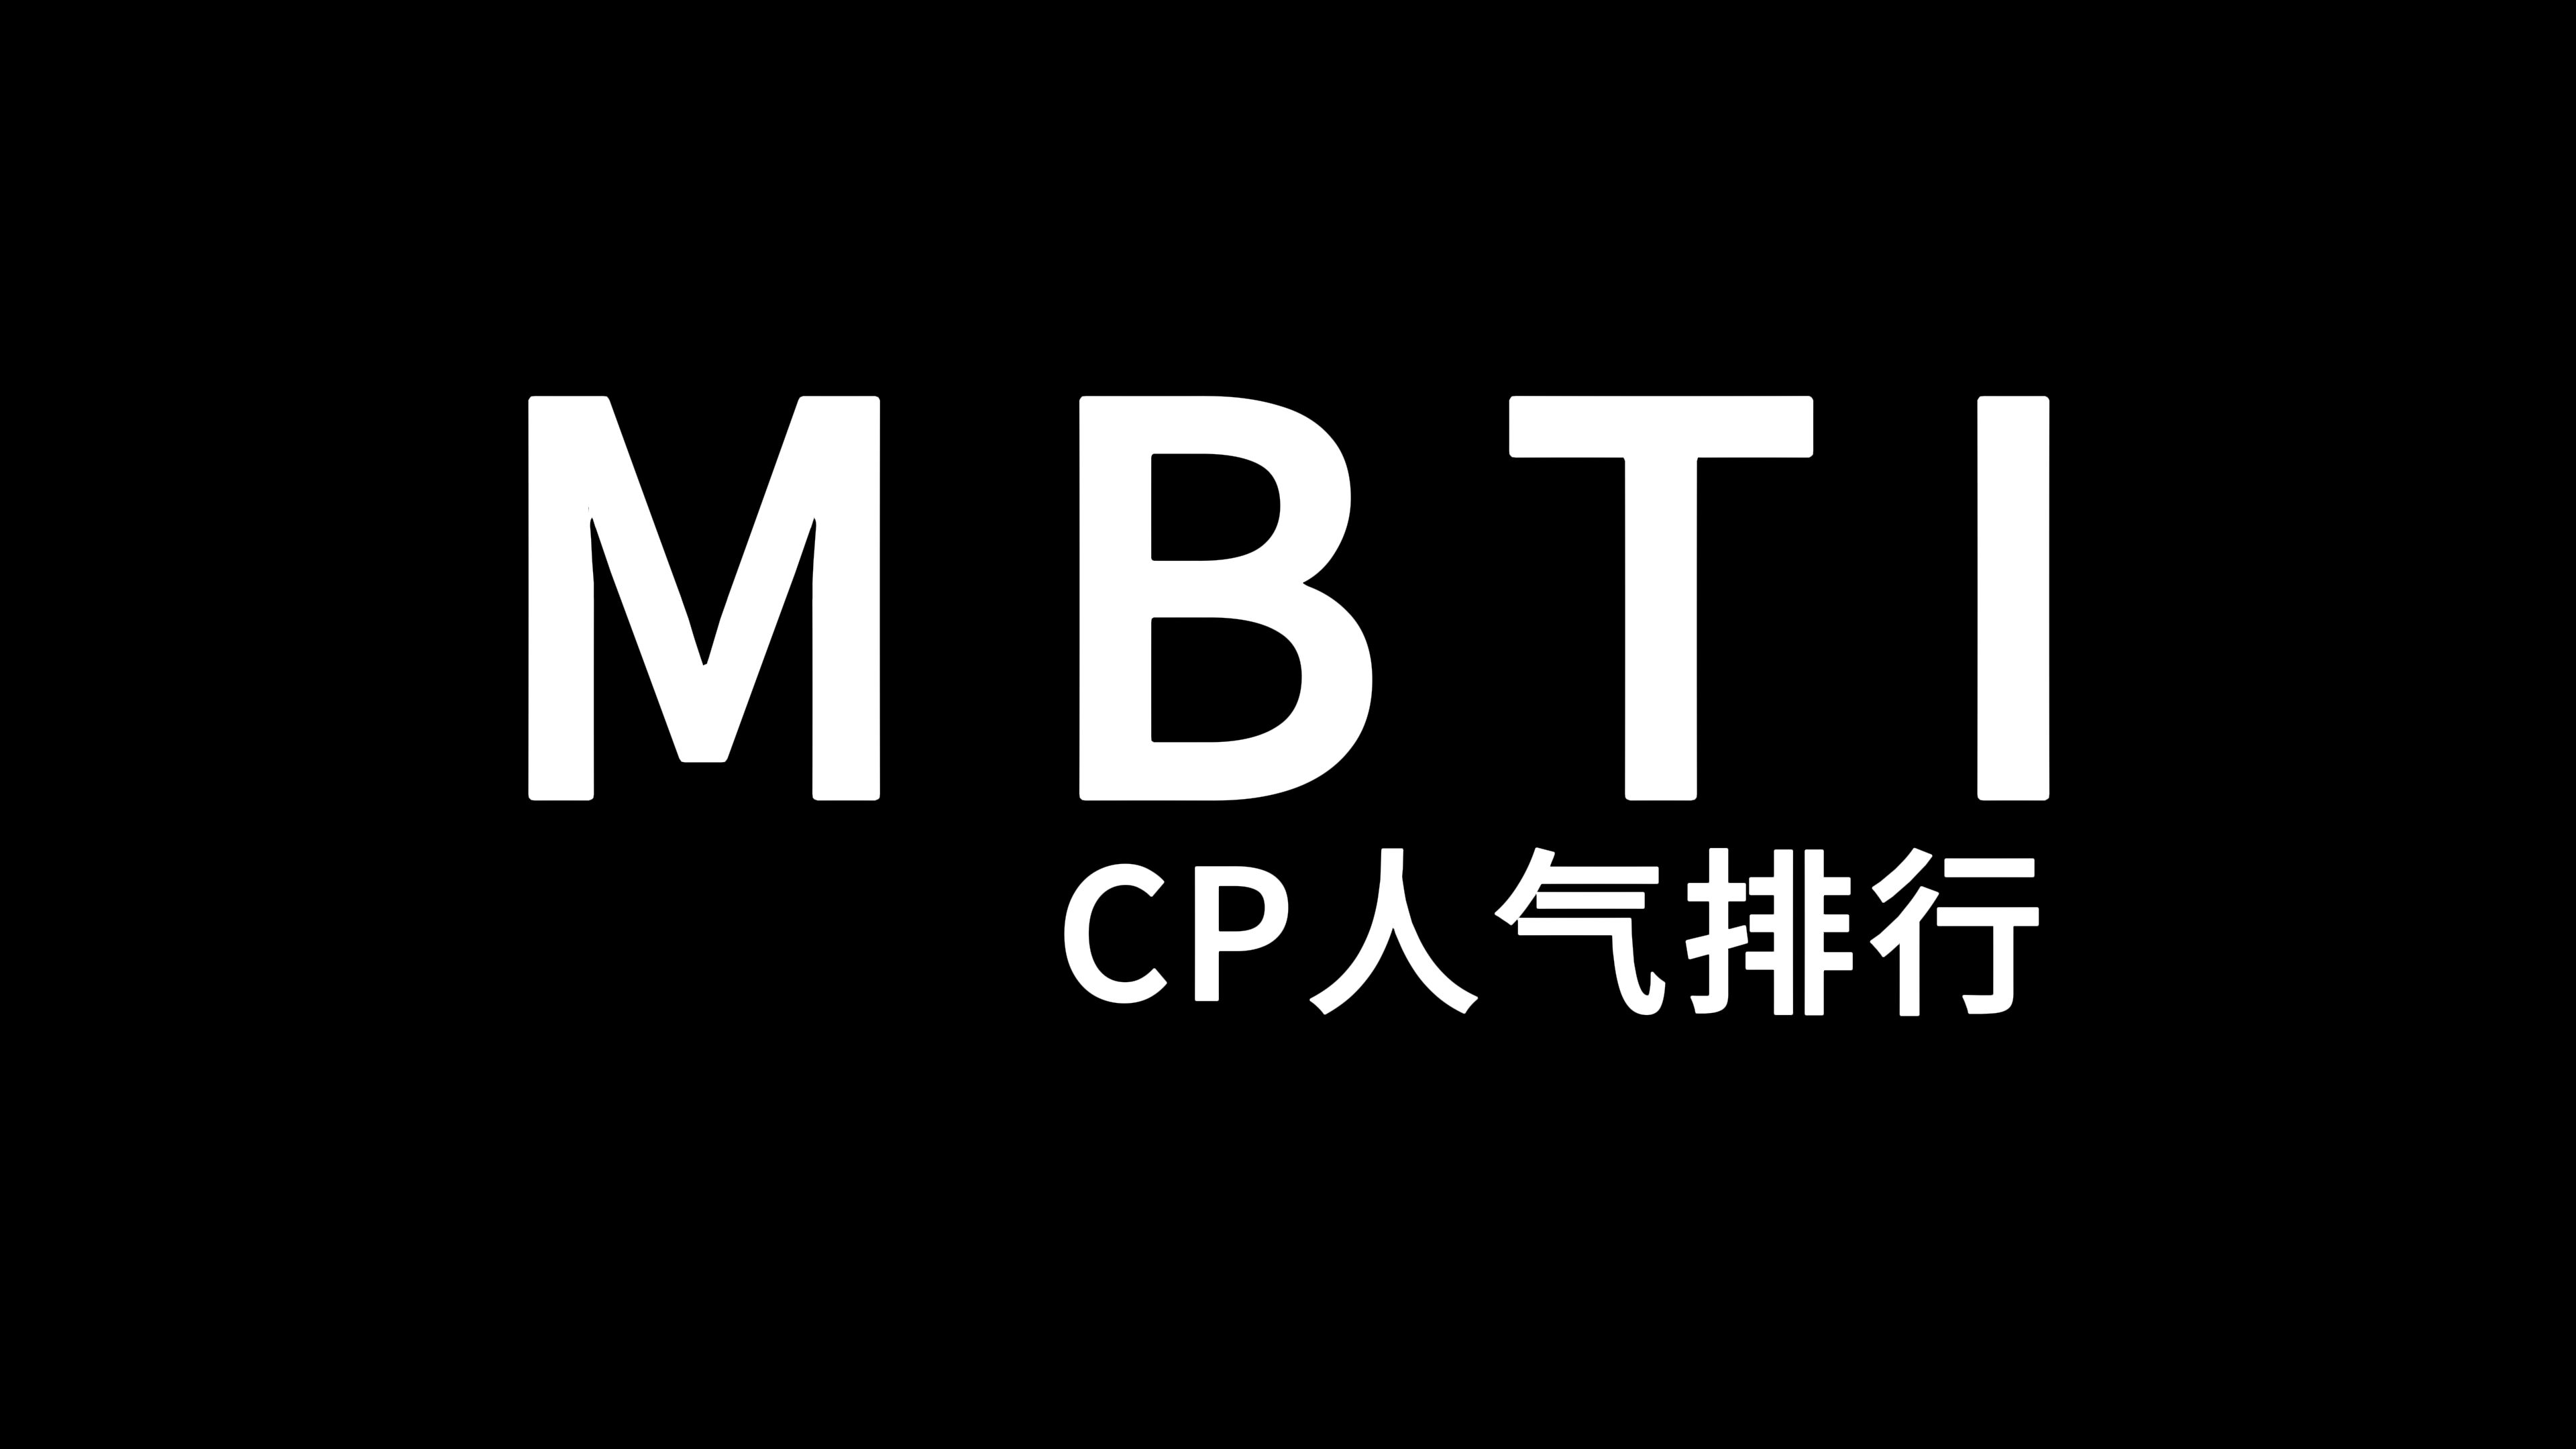 MBTI CP人气排行榜 TOP30